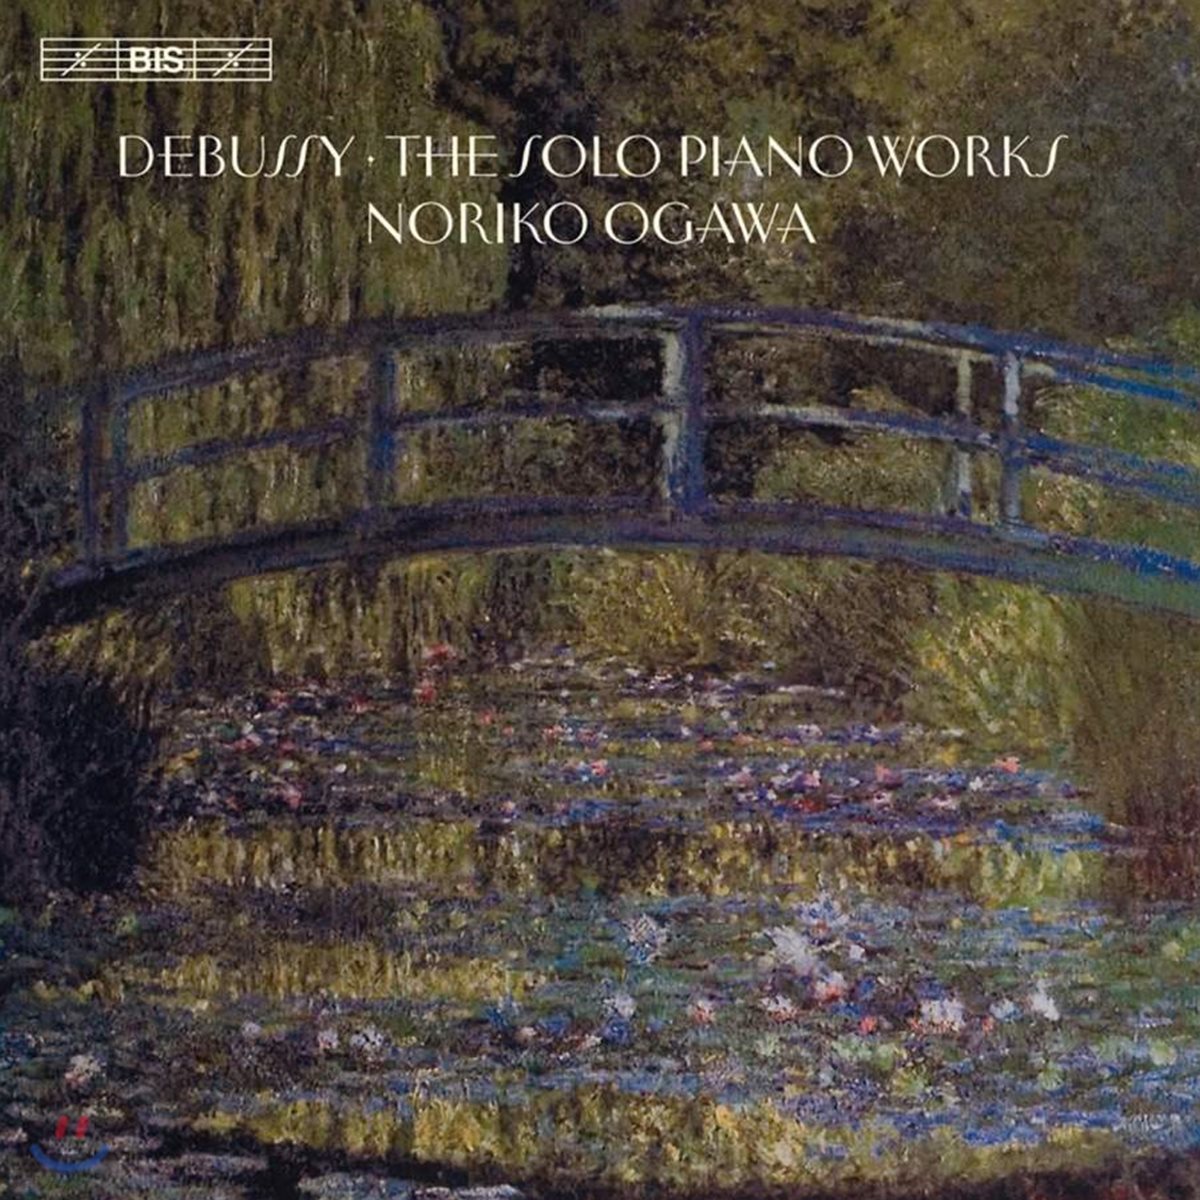 Noriko Ogawa 드뷔시: 솔로 피아노 작품 전곡집 - 노리코 오가와 (Debussy : The Solo Piano Works)